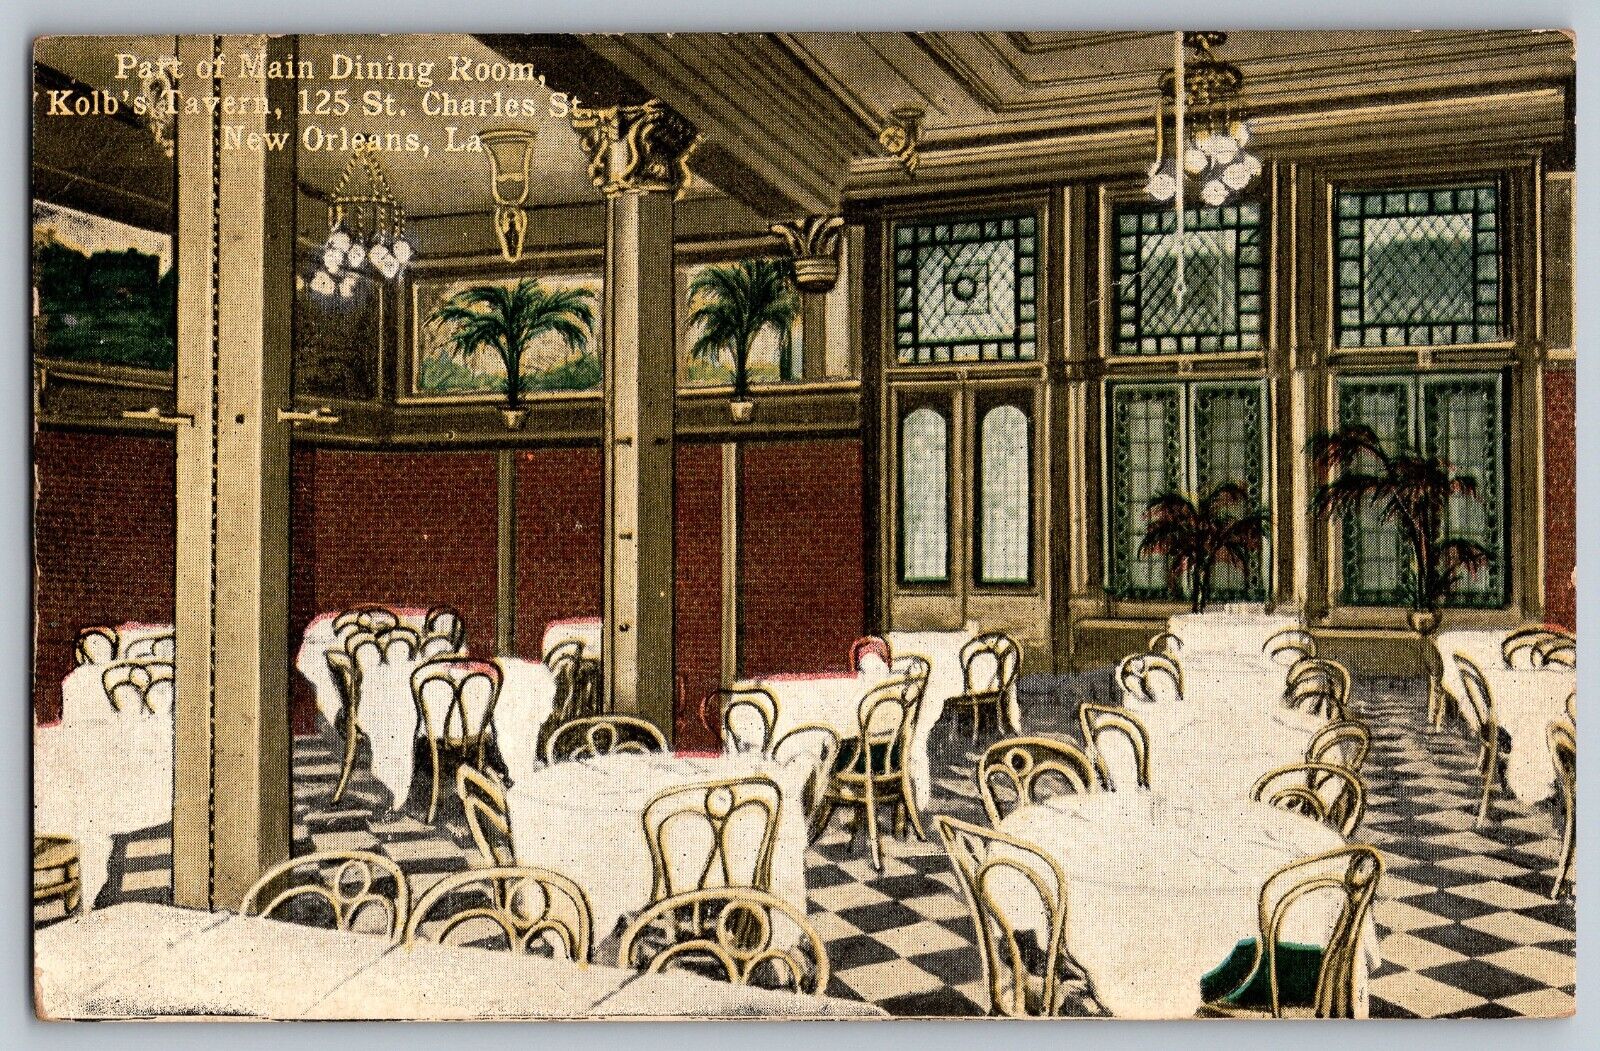 New Orleans, LA - Dining Room at Kolb's Tavern Restaurant - Vintage Postcard